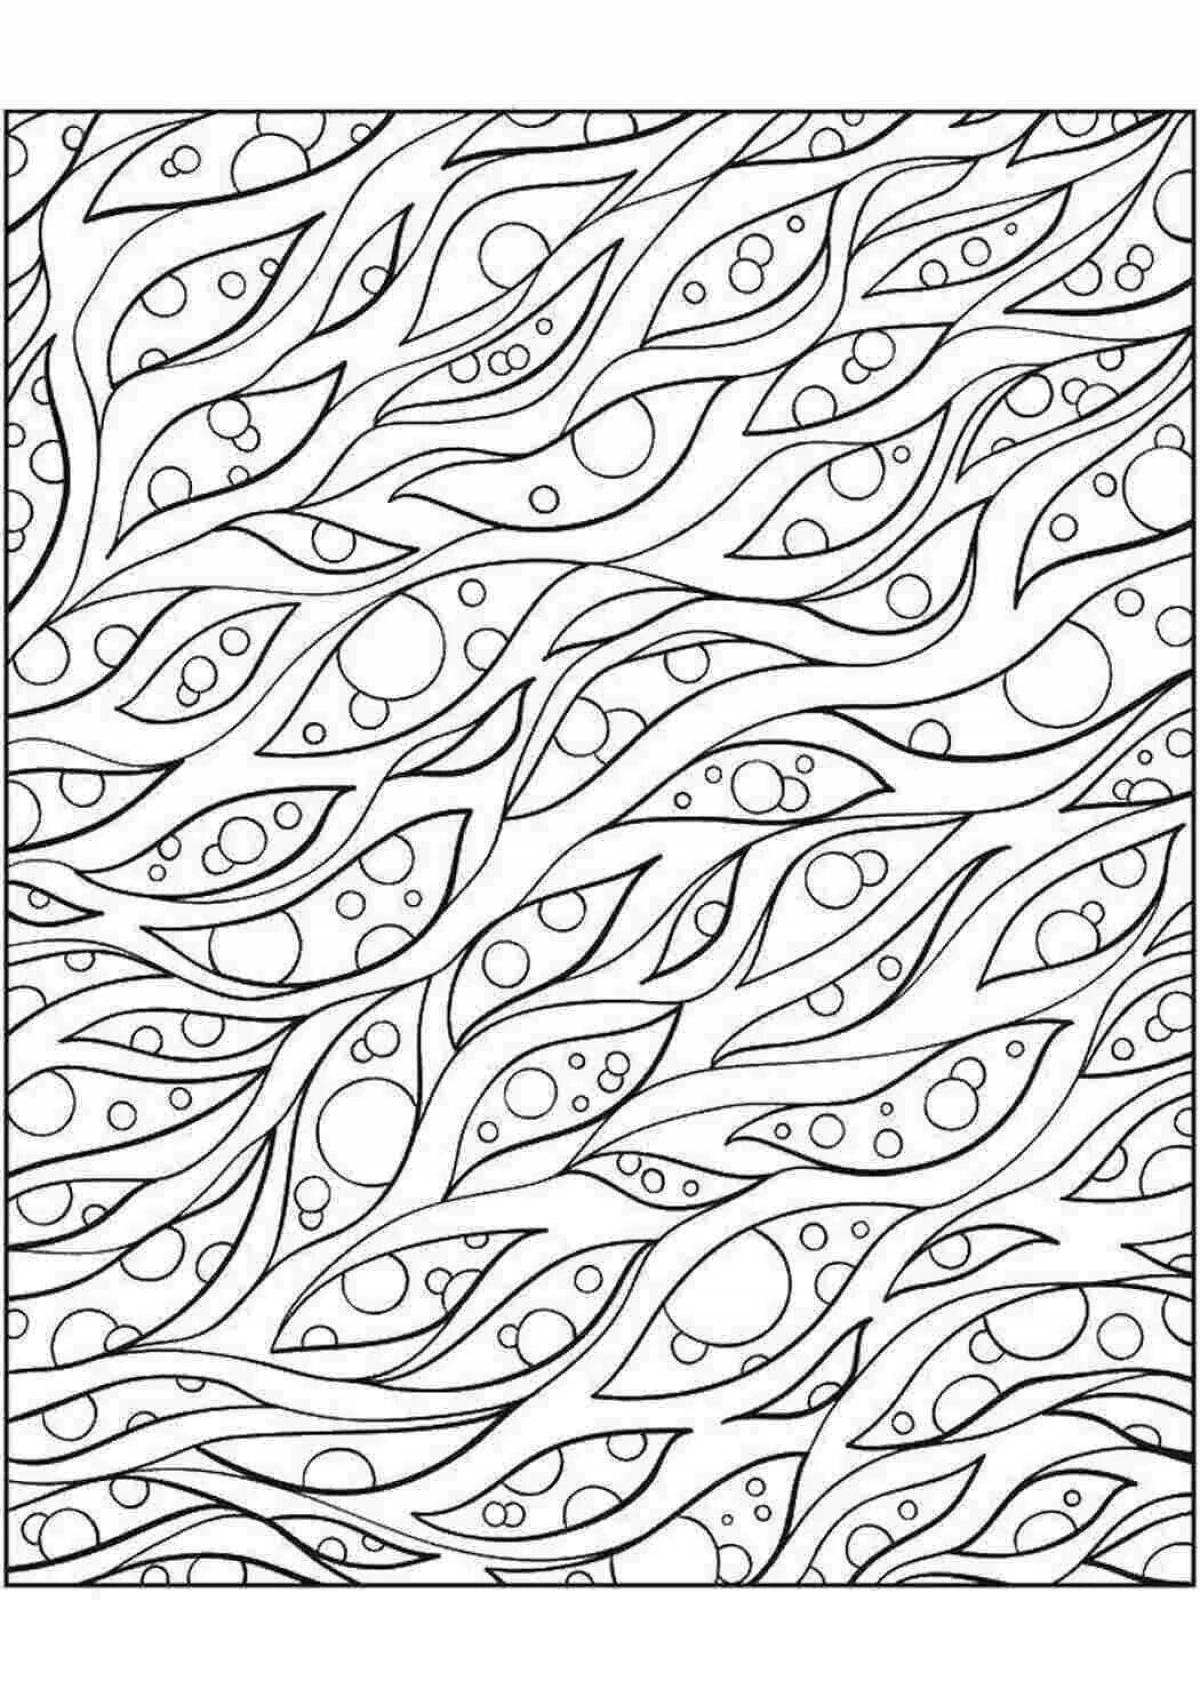 Adorable striped anti-stress coloring book